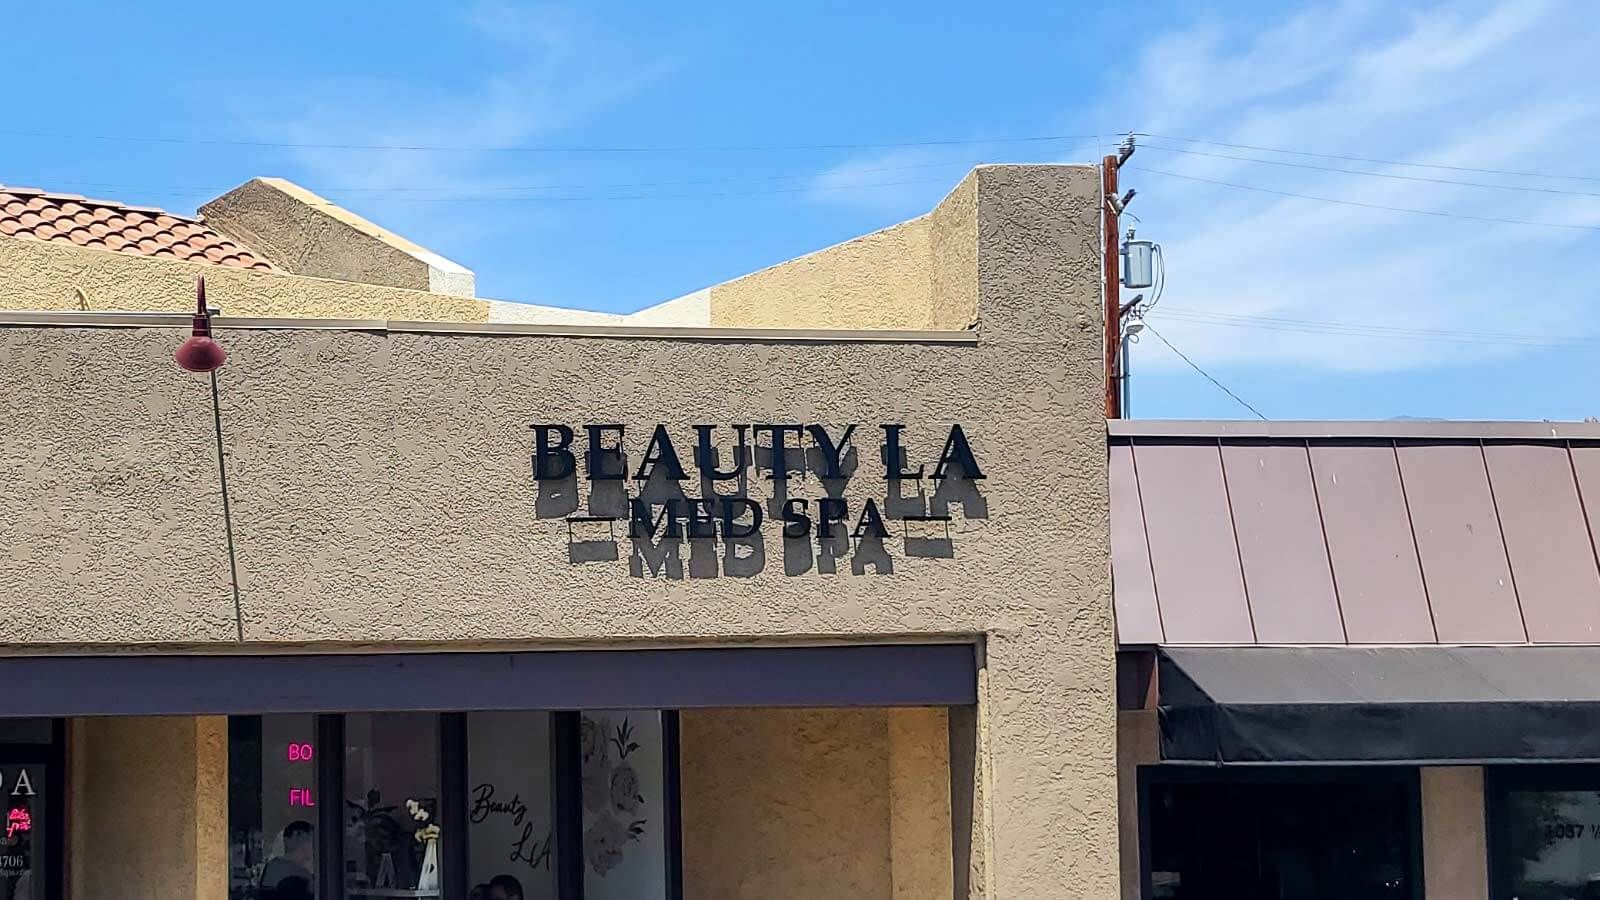 Beauty LA Med Spa 3D PVC letters for branding